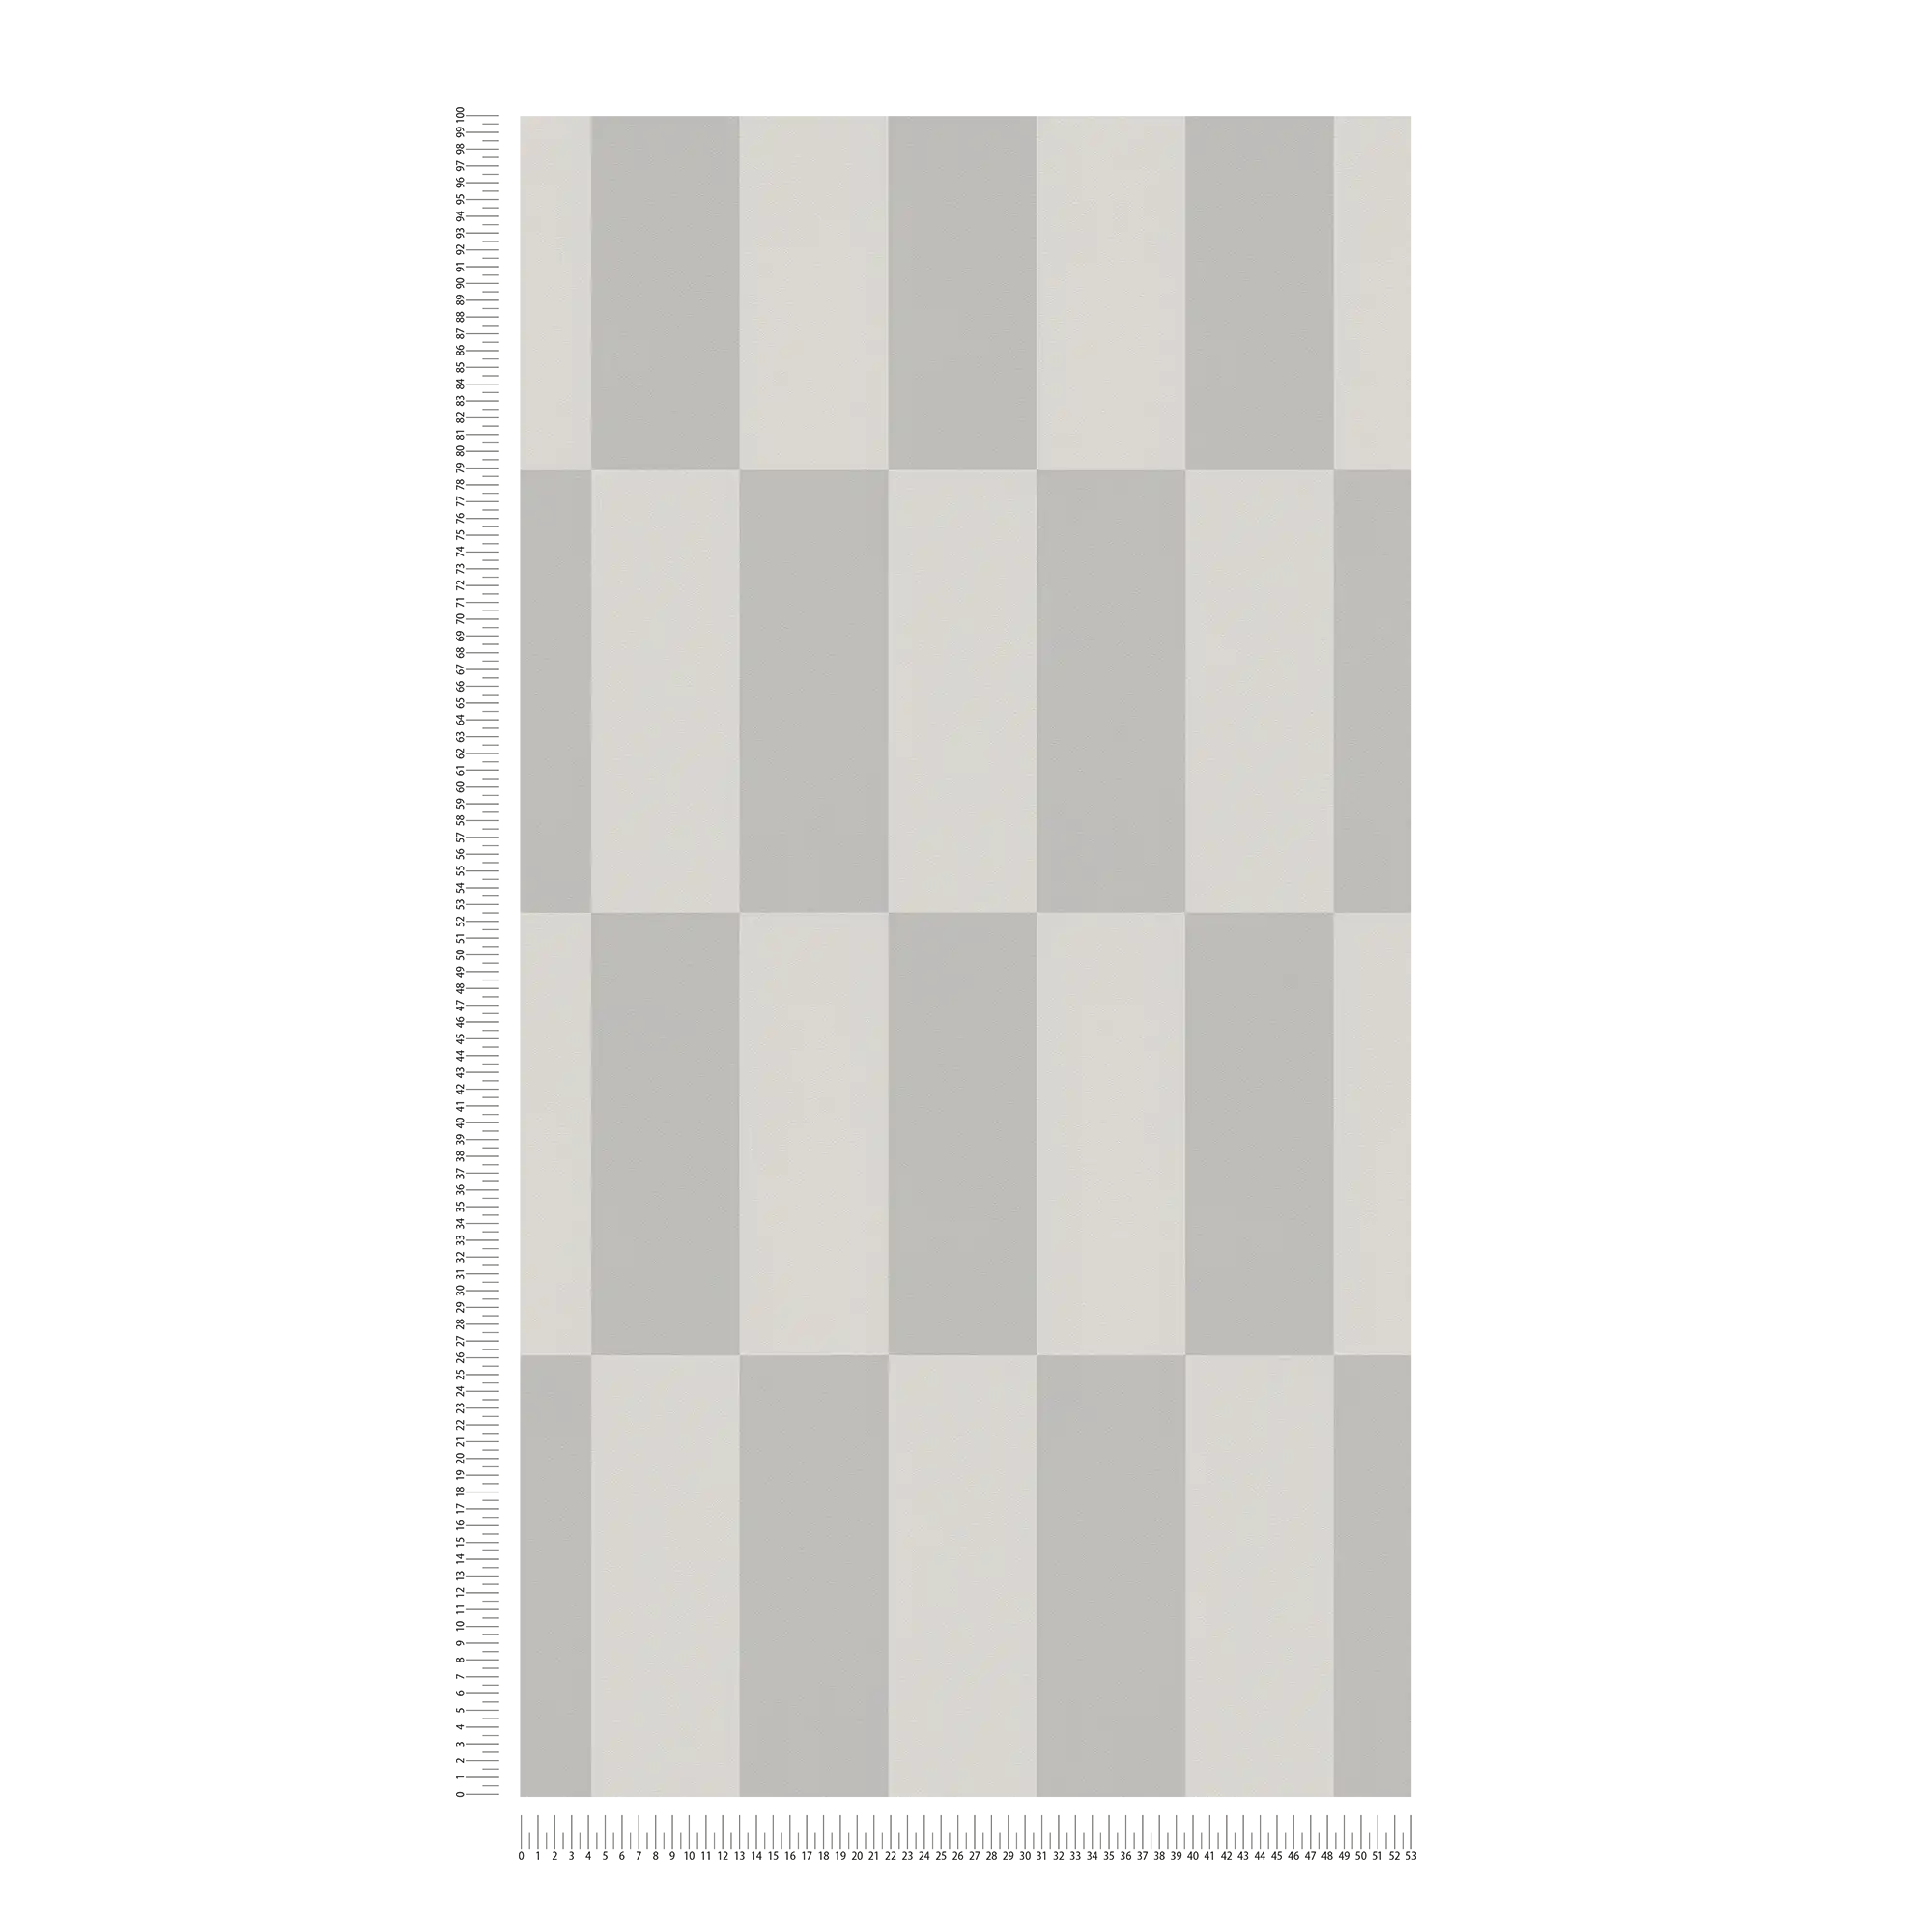             Papel pintado no tejido con motivo gráfico cuadrado - gris
        